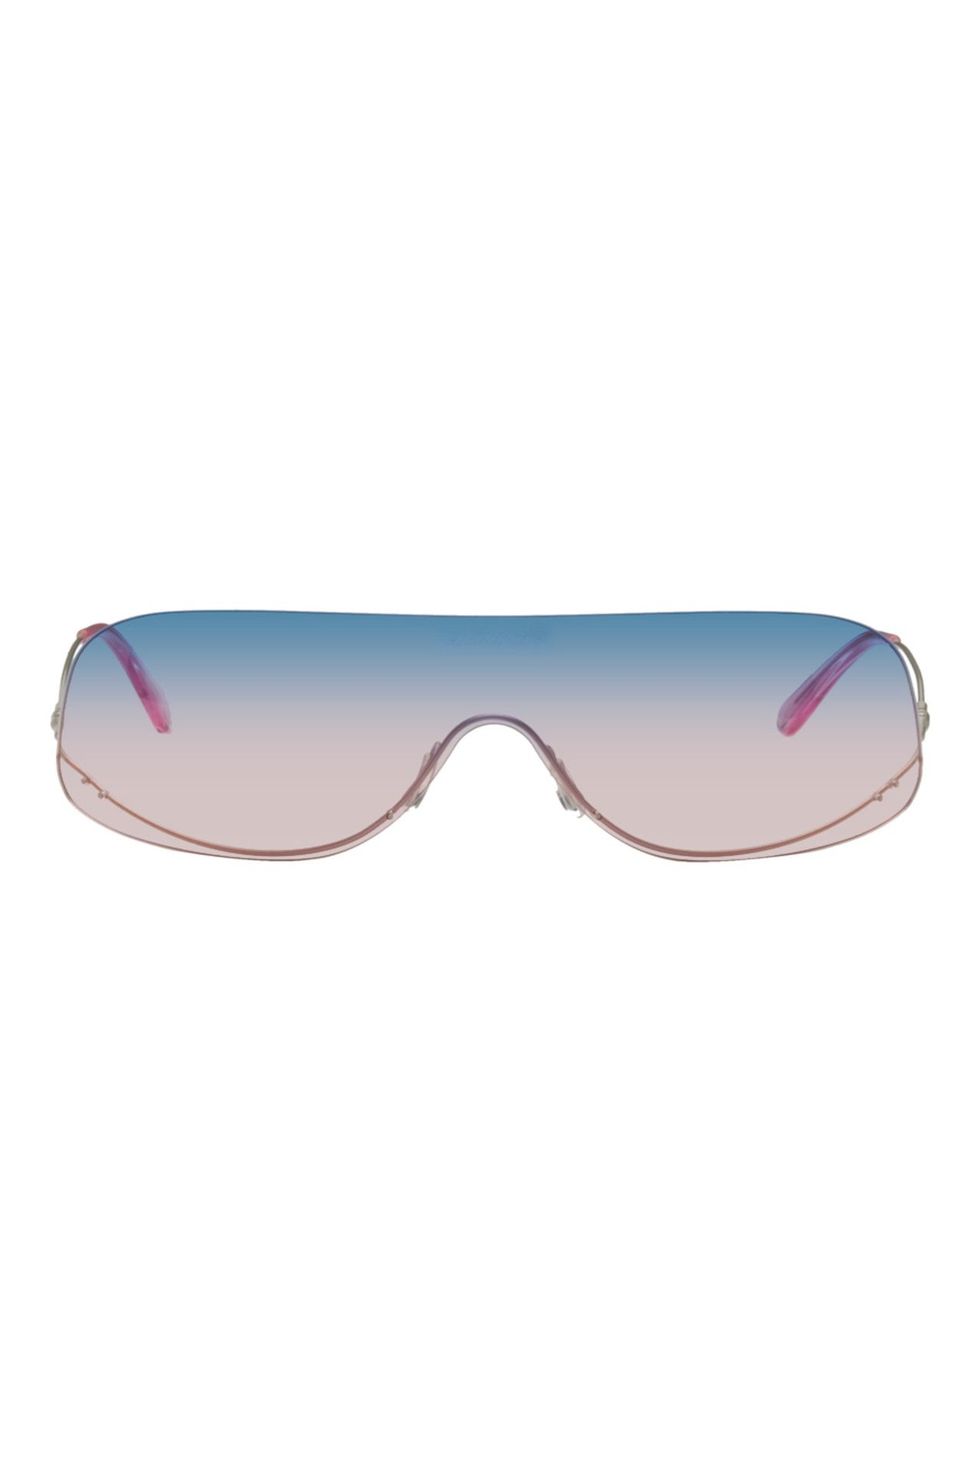 SSENSE Exclusive Blue & Pink Rimless Sunglasses